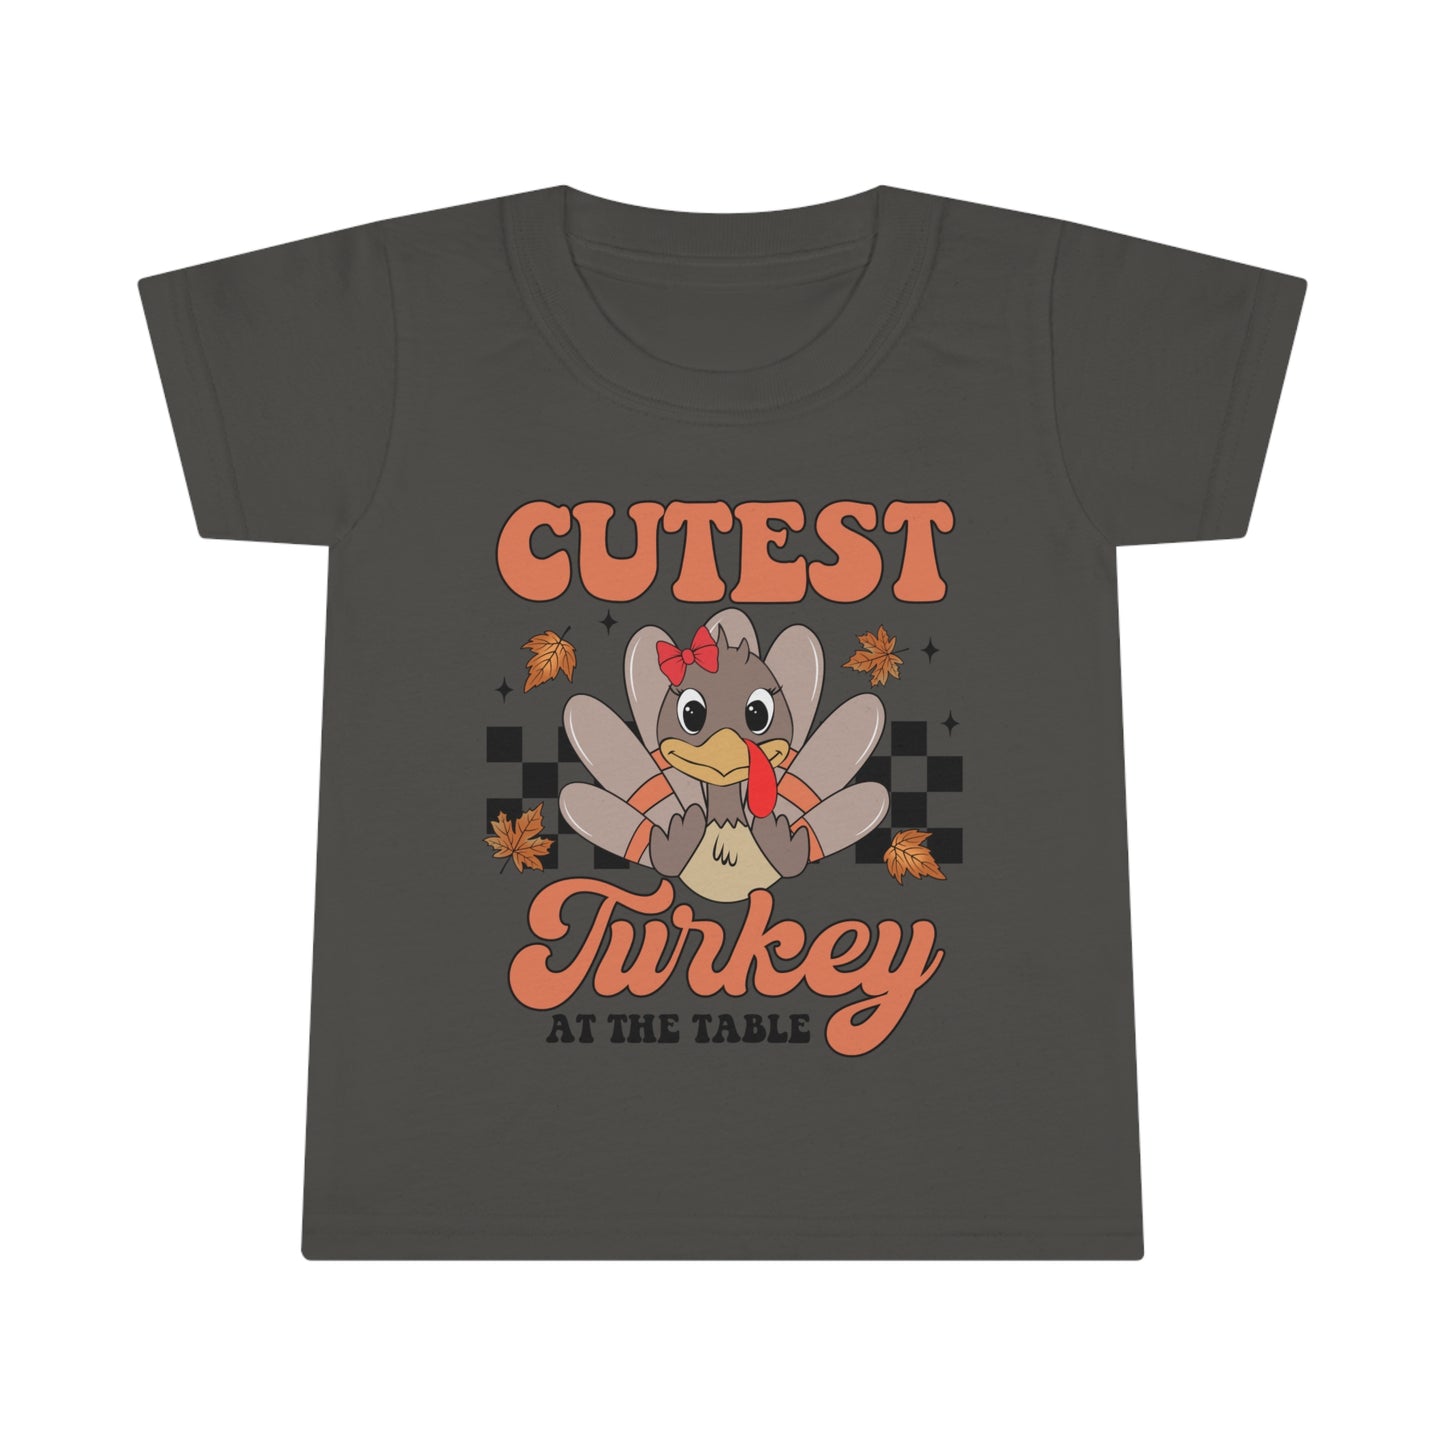 Cutest Turkey Gildan Toddler T-shirt